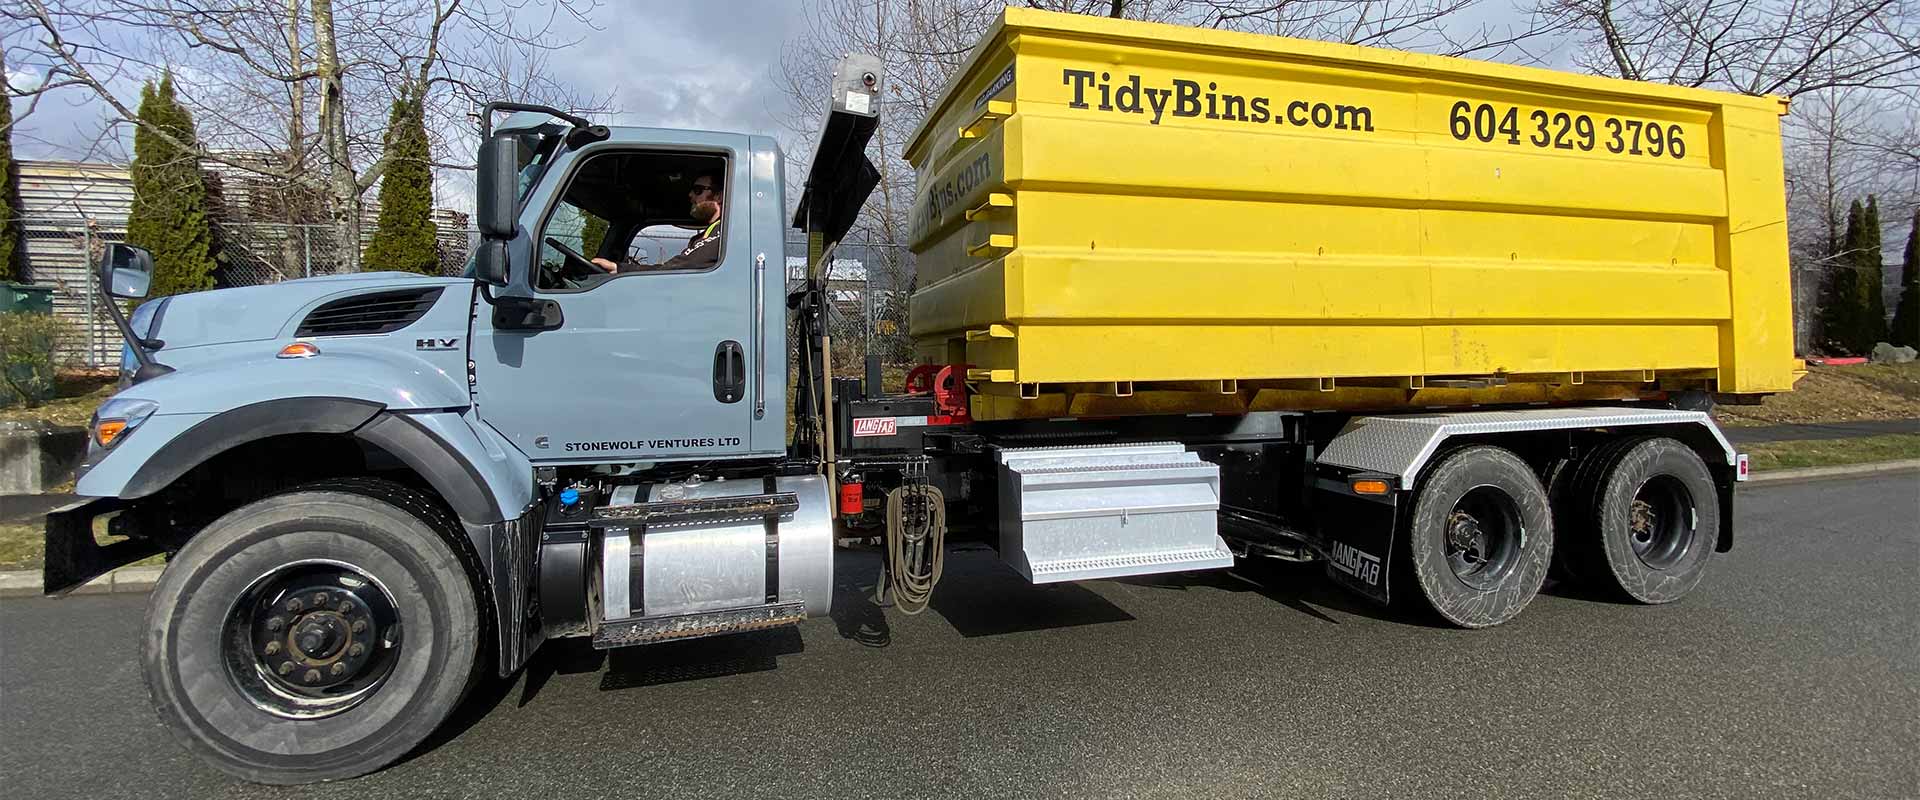 TidyBins Truck